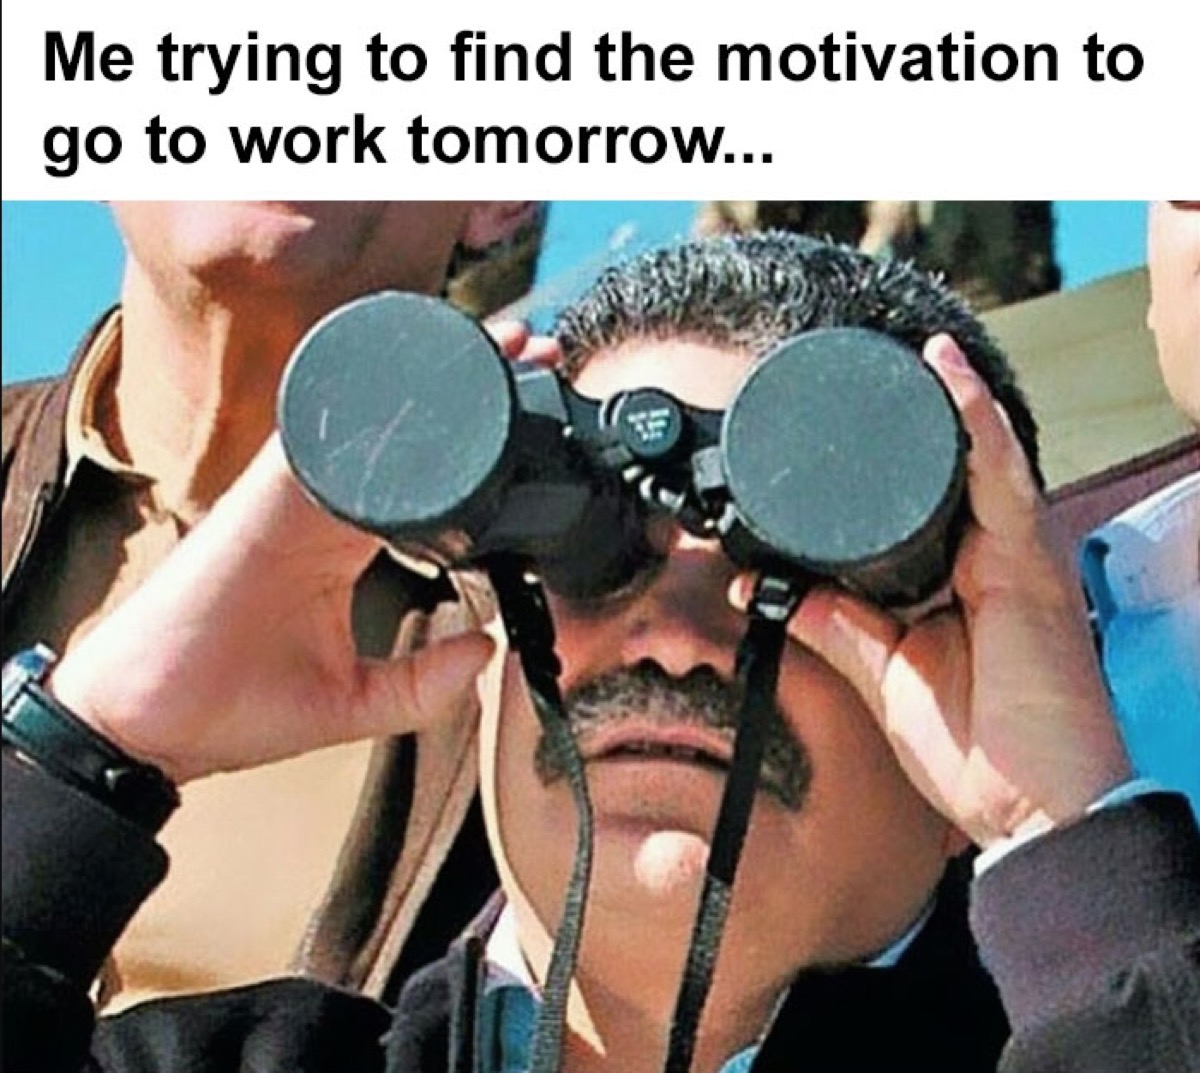 motivational work meme